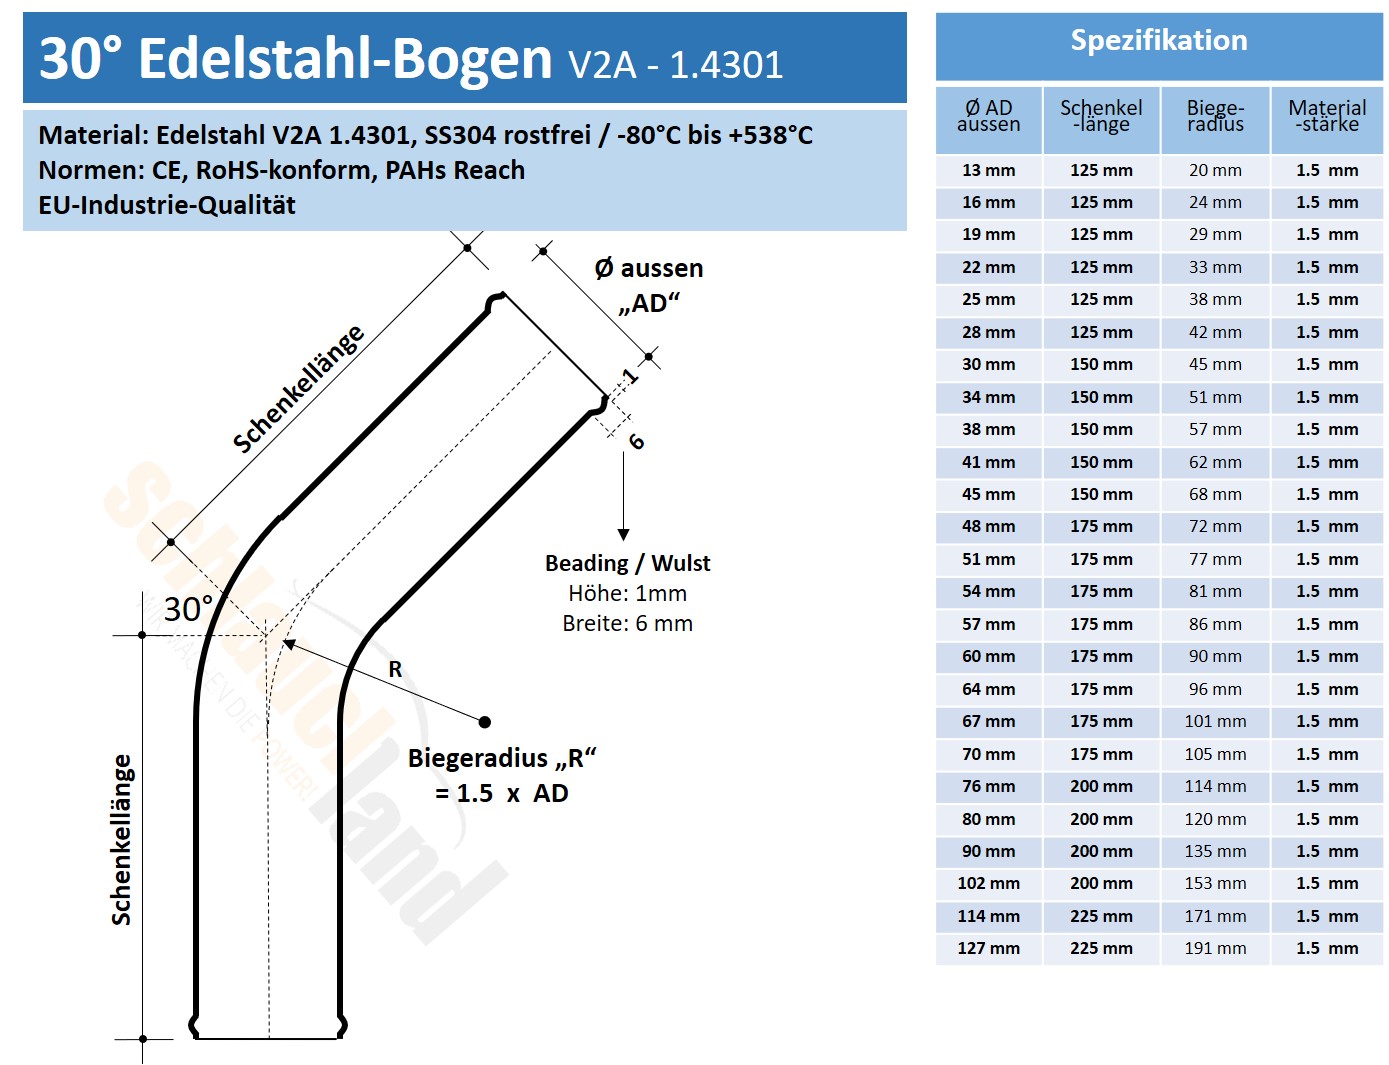 Datenblatt Edelstahl-Bogen 30° V2A